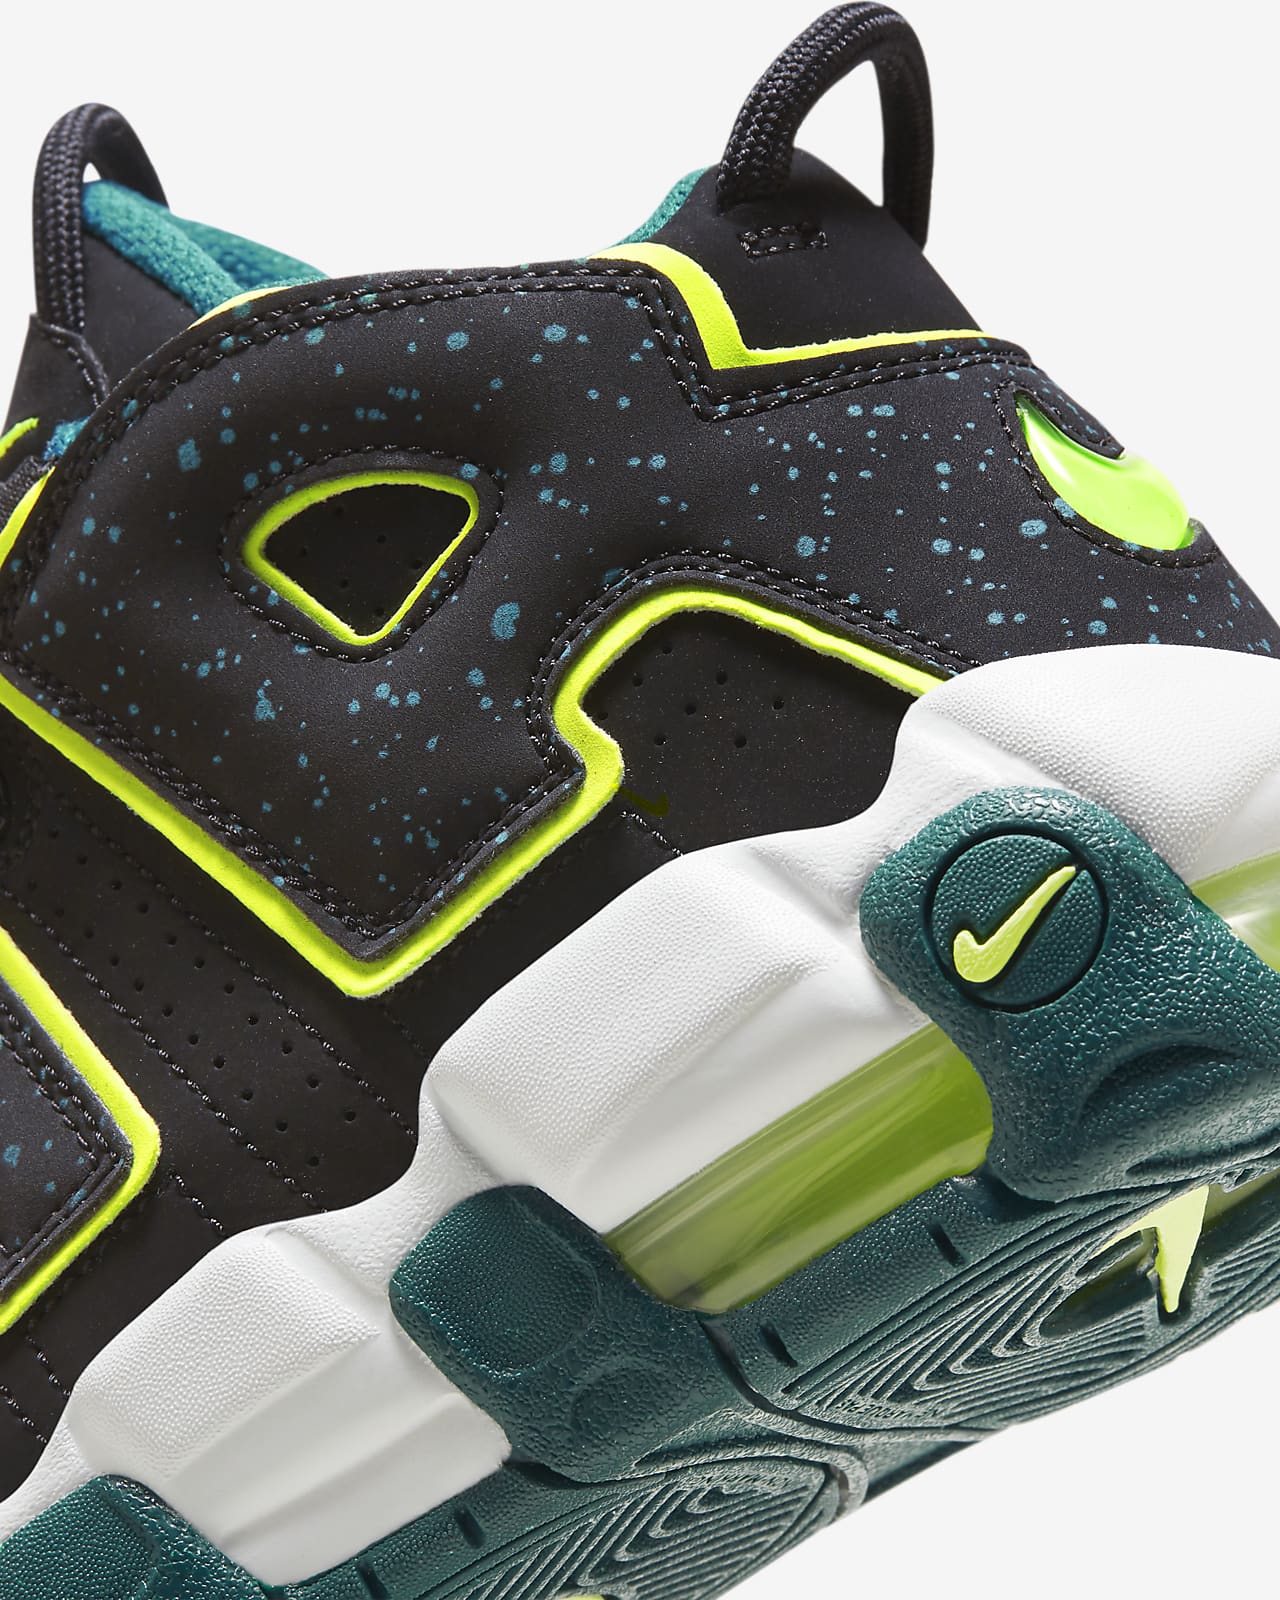 Nike Air Max Uptempo 95 Neon Release Info